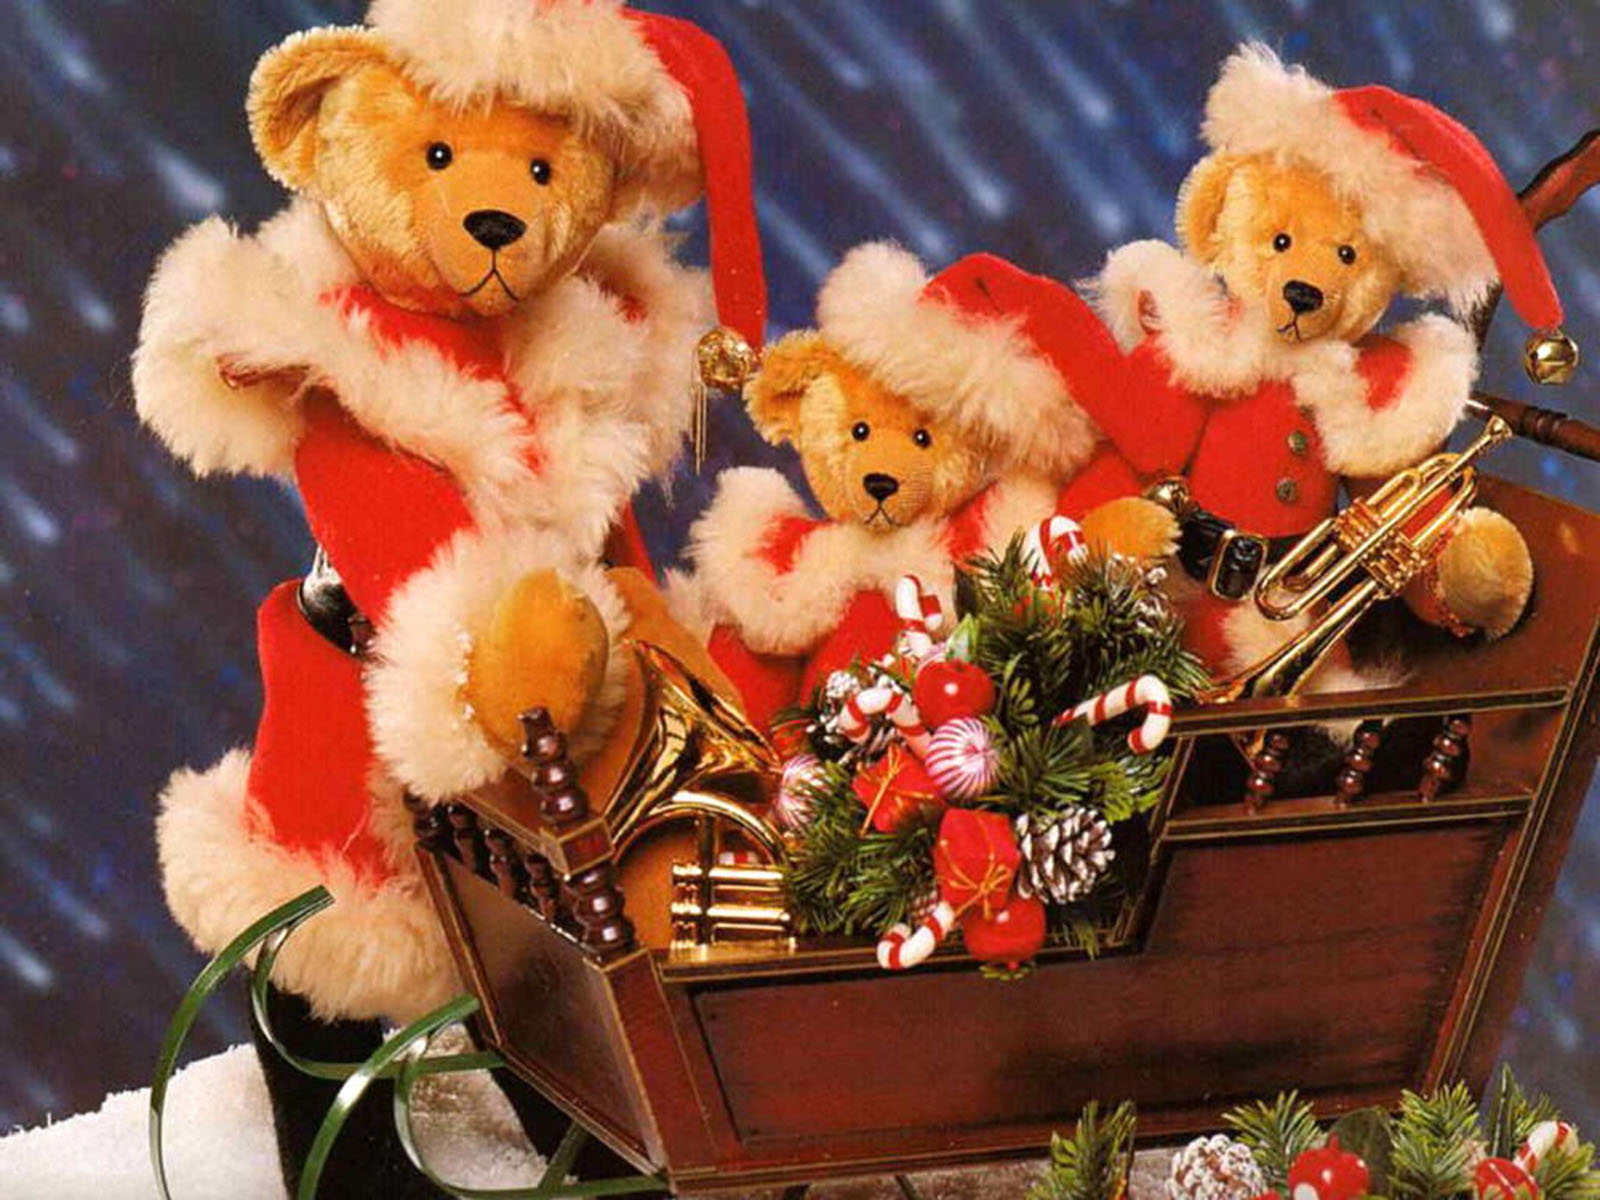 http://2.bp.blogspot.com/-uBj8qN2NvdM/T3FurKV2-WI/AAAAAAAABaE/04CNHLuEczw/s1600/Christmas+Teddy+Bear+Wallpapers.jpg